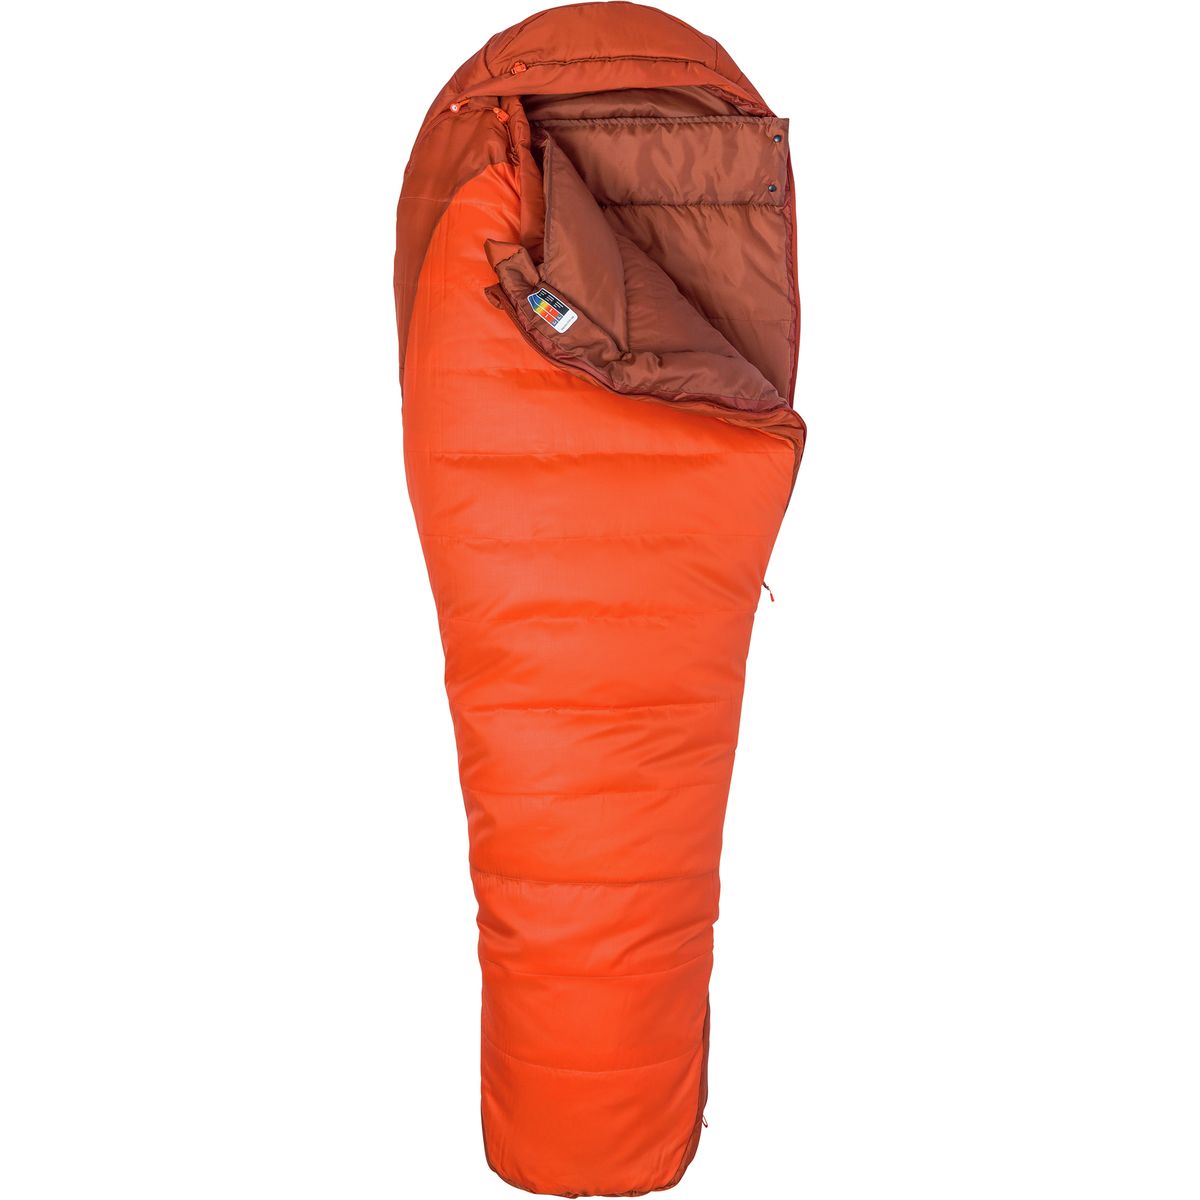 Marmot Trestles 0 Sleeping Bag: 0F Synthetic